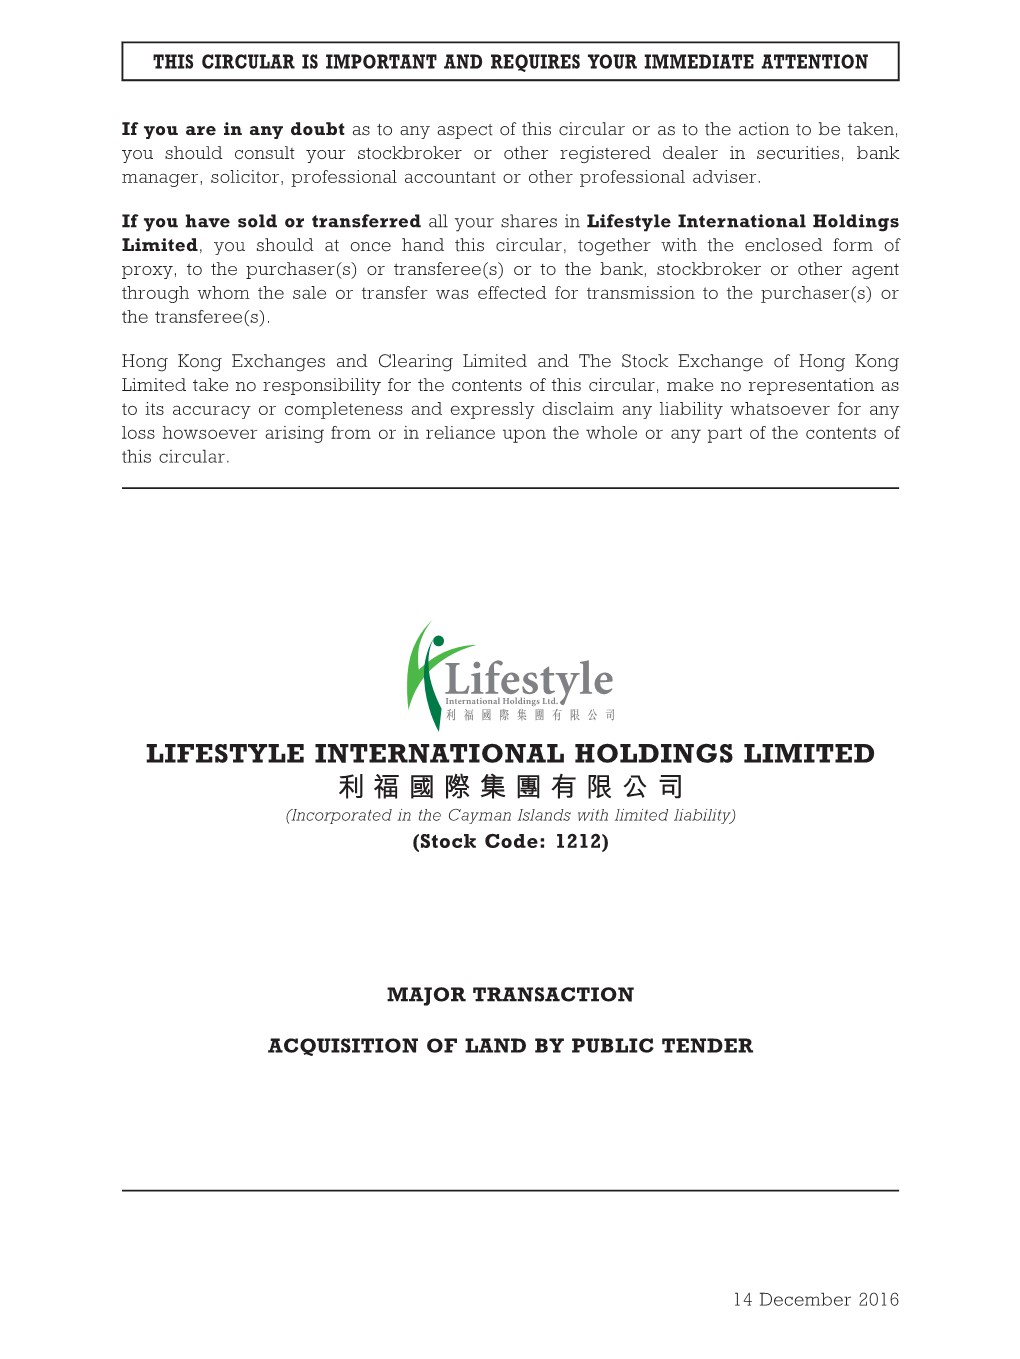 Lifestyle International Holdings Limited 利福國際 集團